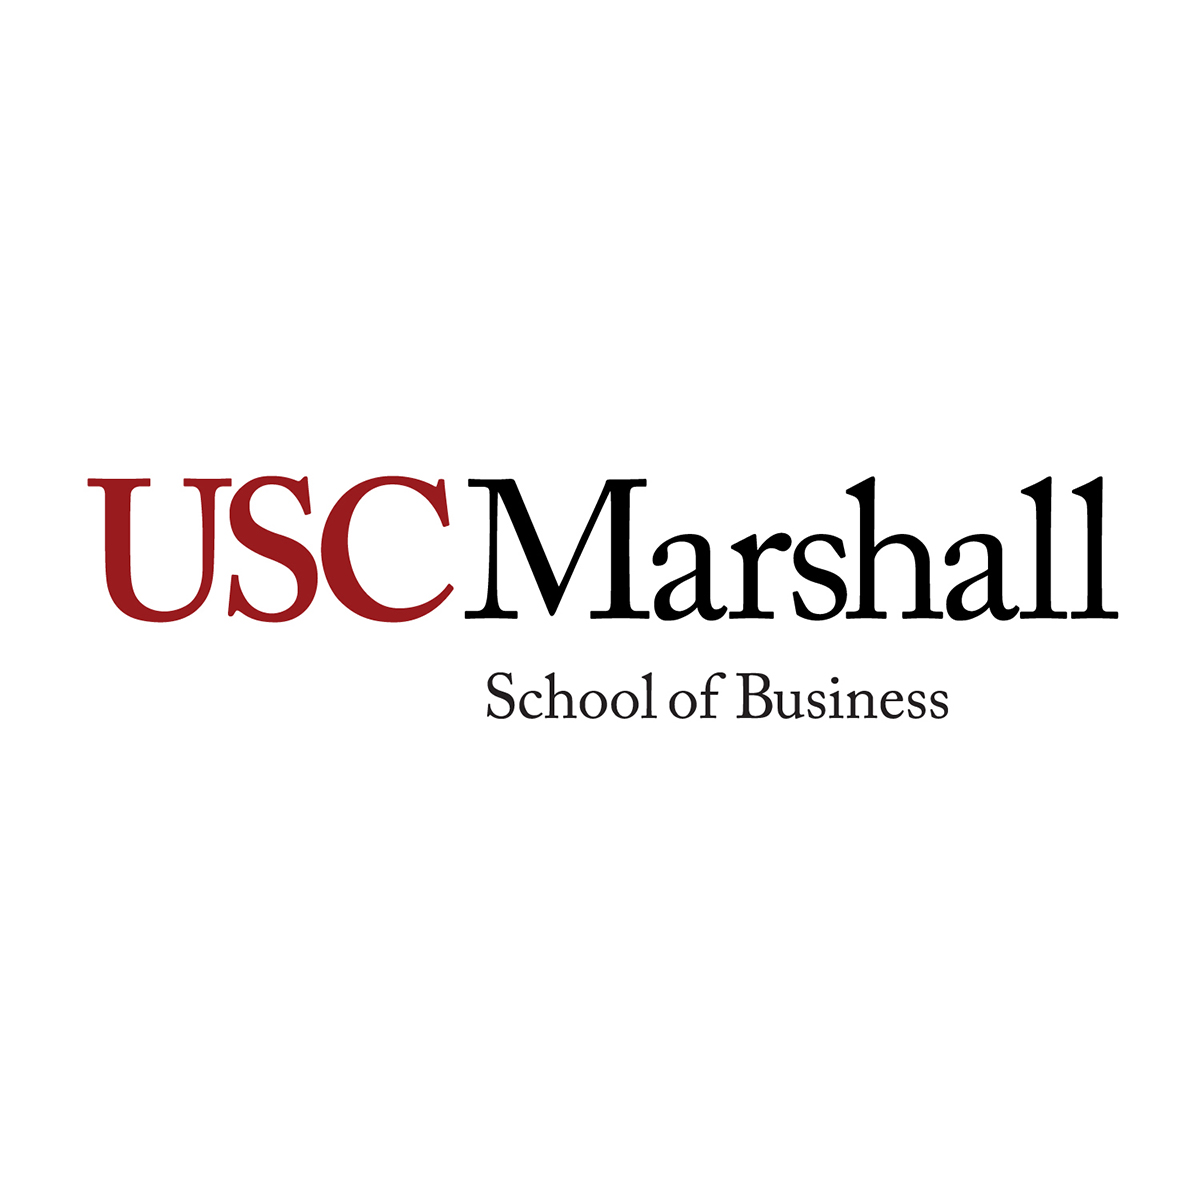 B-USC Marshall.jpg